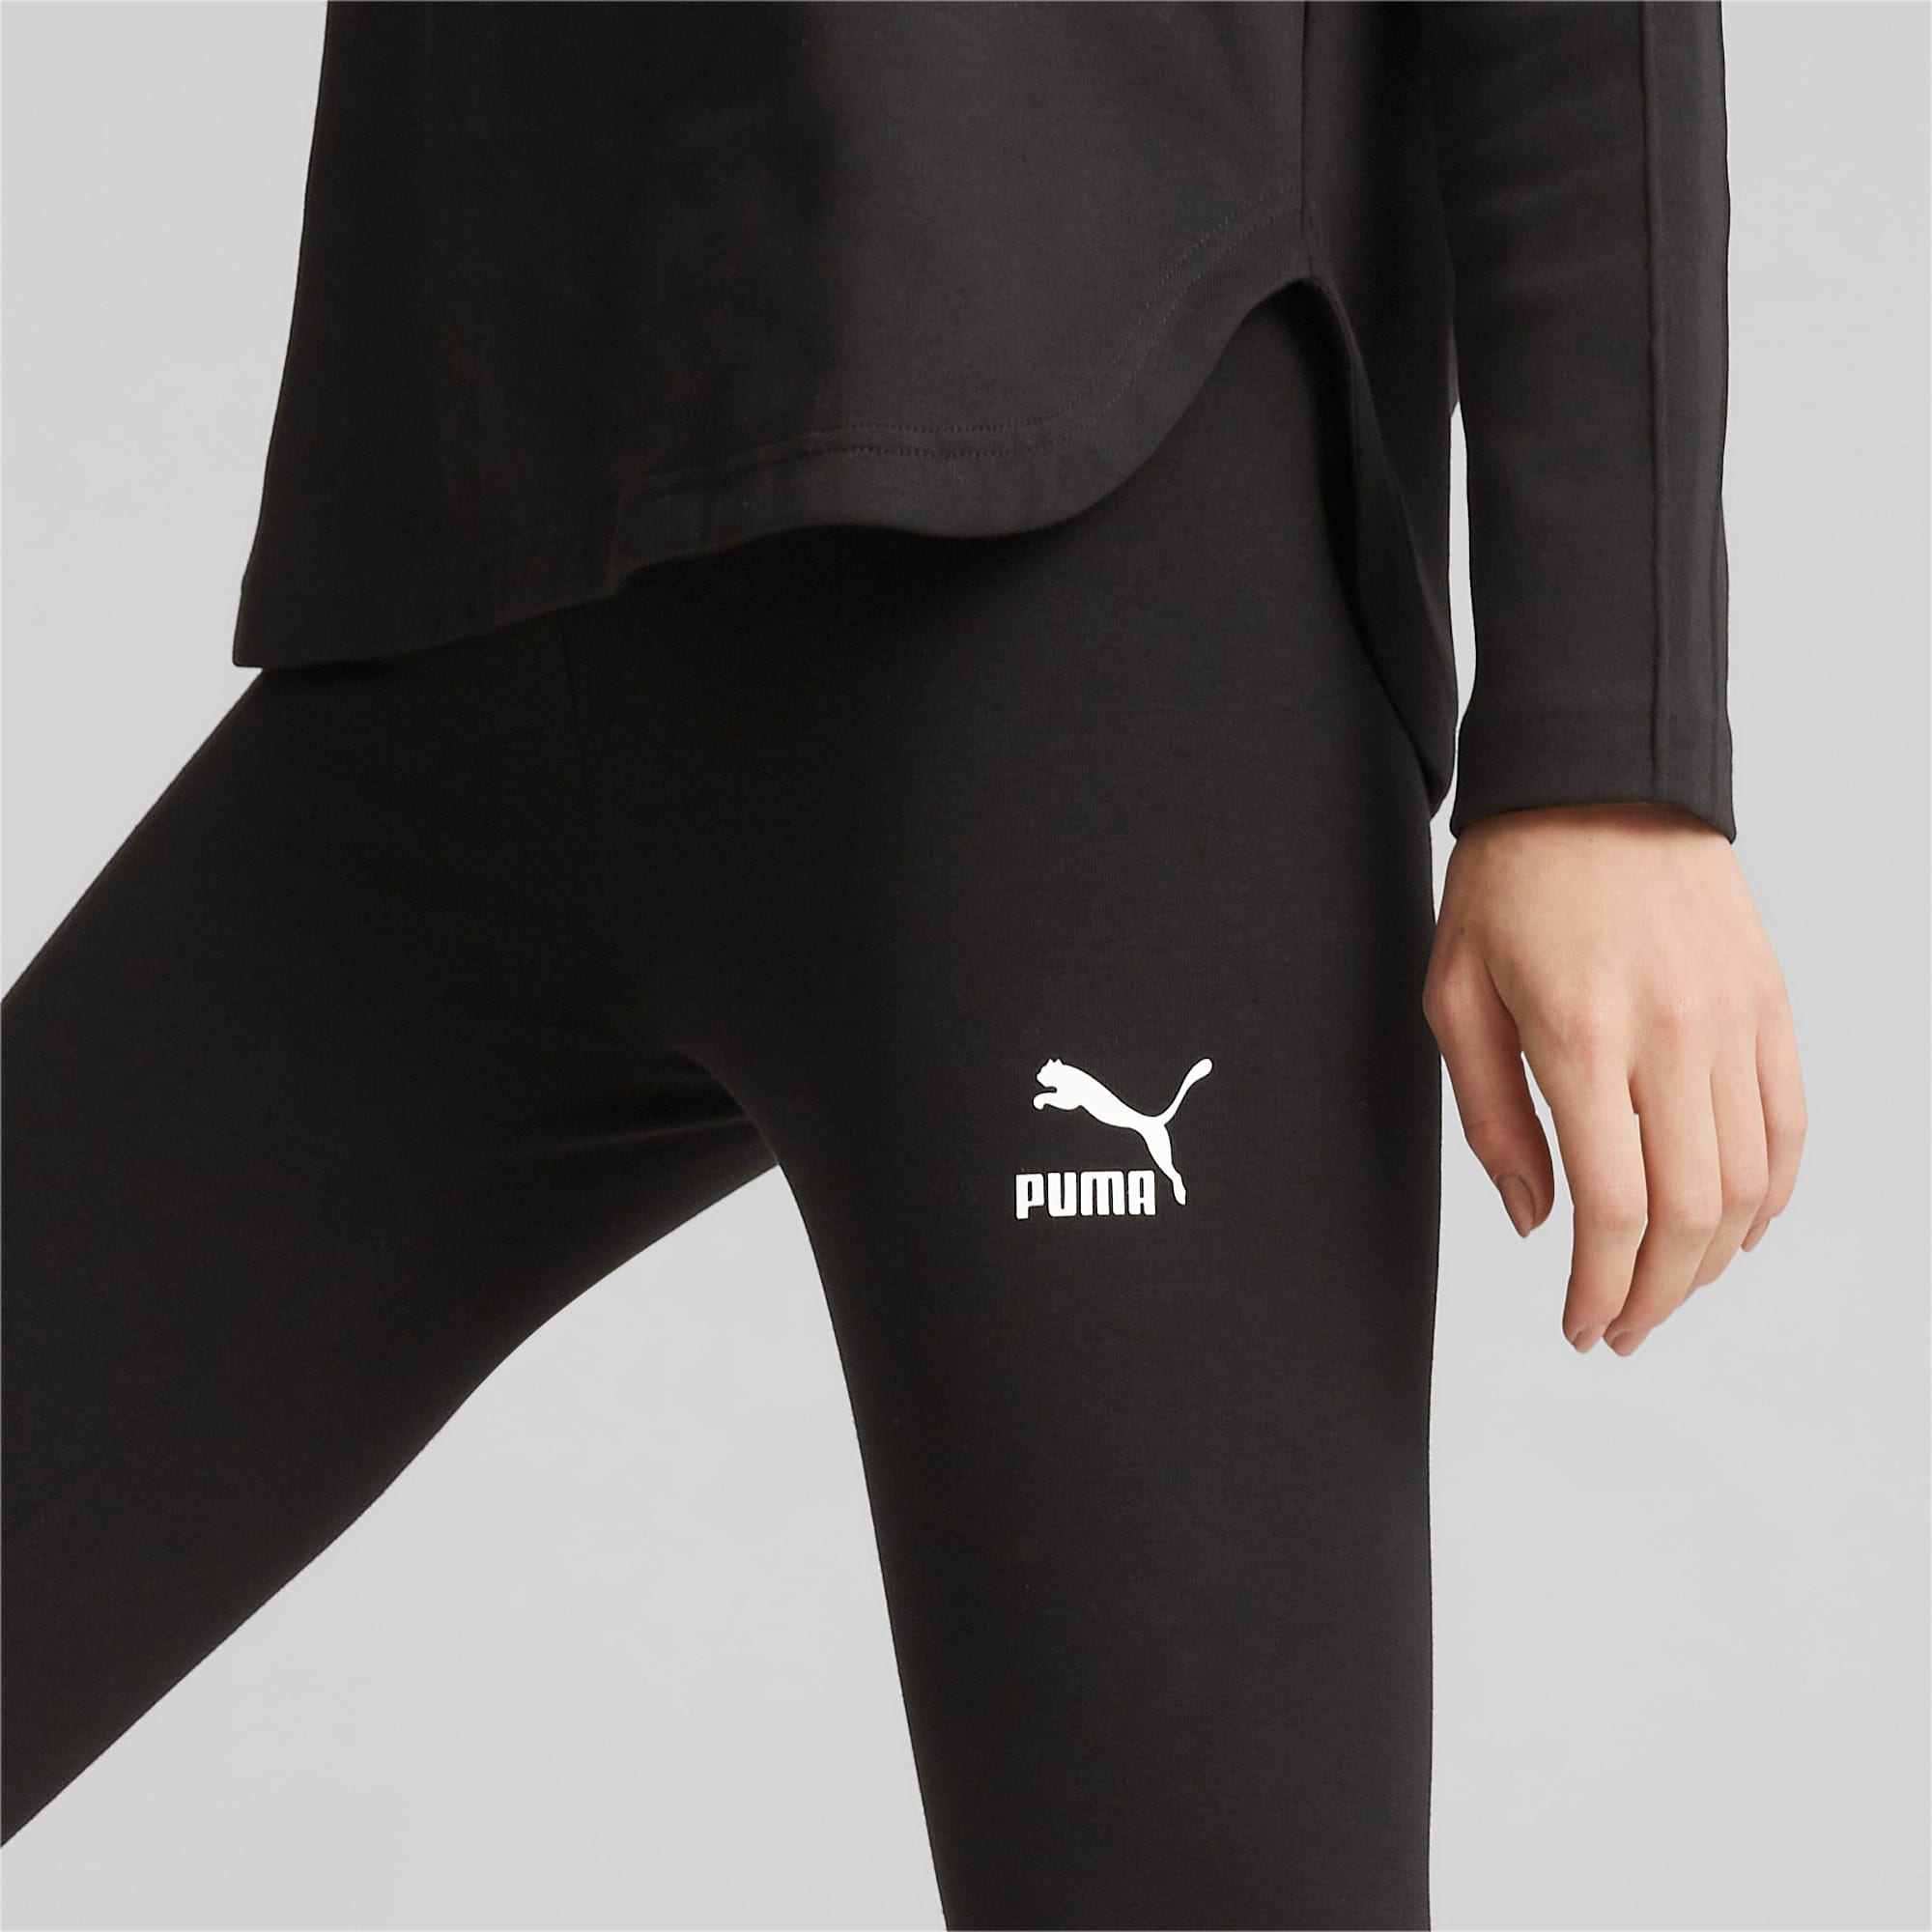 District Concept Store - Puma T7 Shiny Leggings - Black (536226-01)